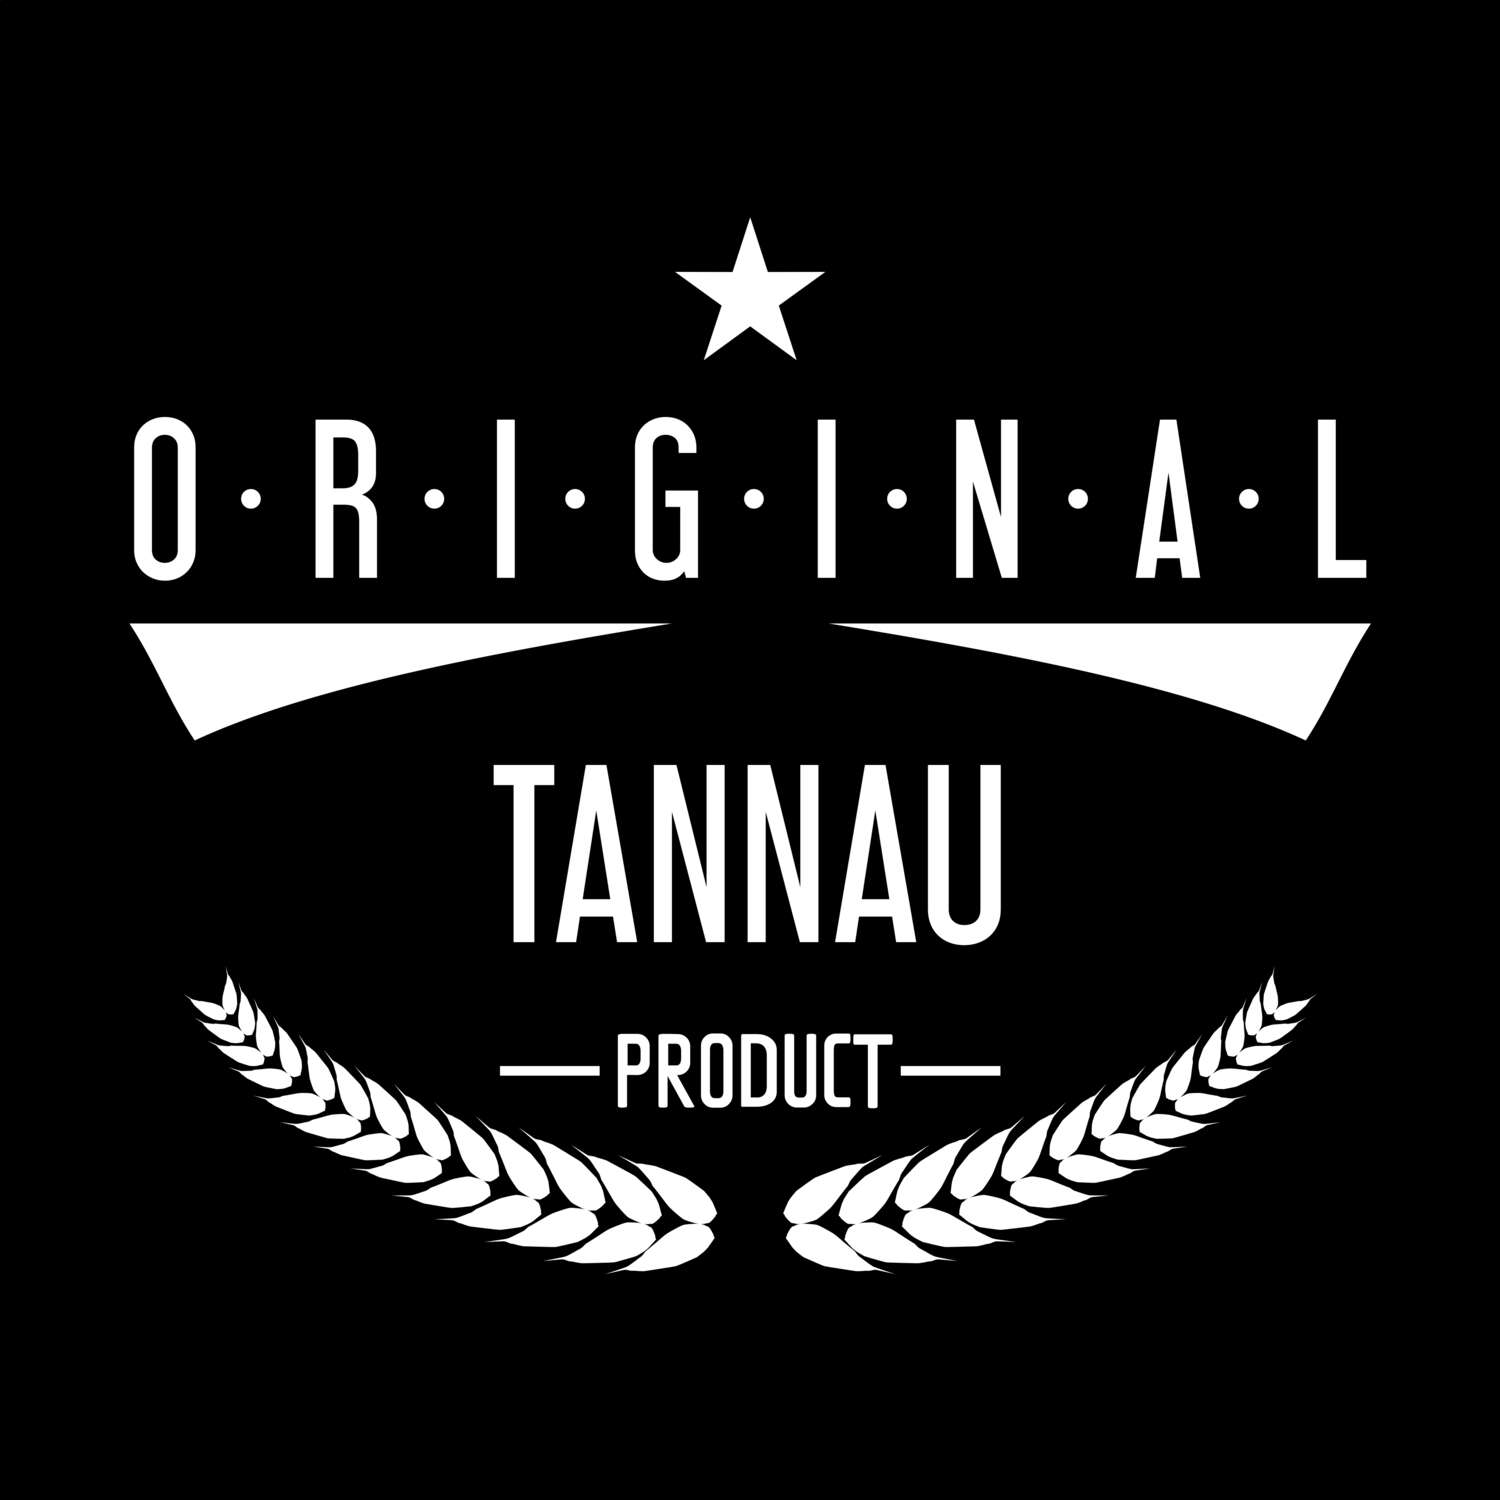 Tannau T-Shirt »Original Product«